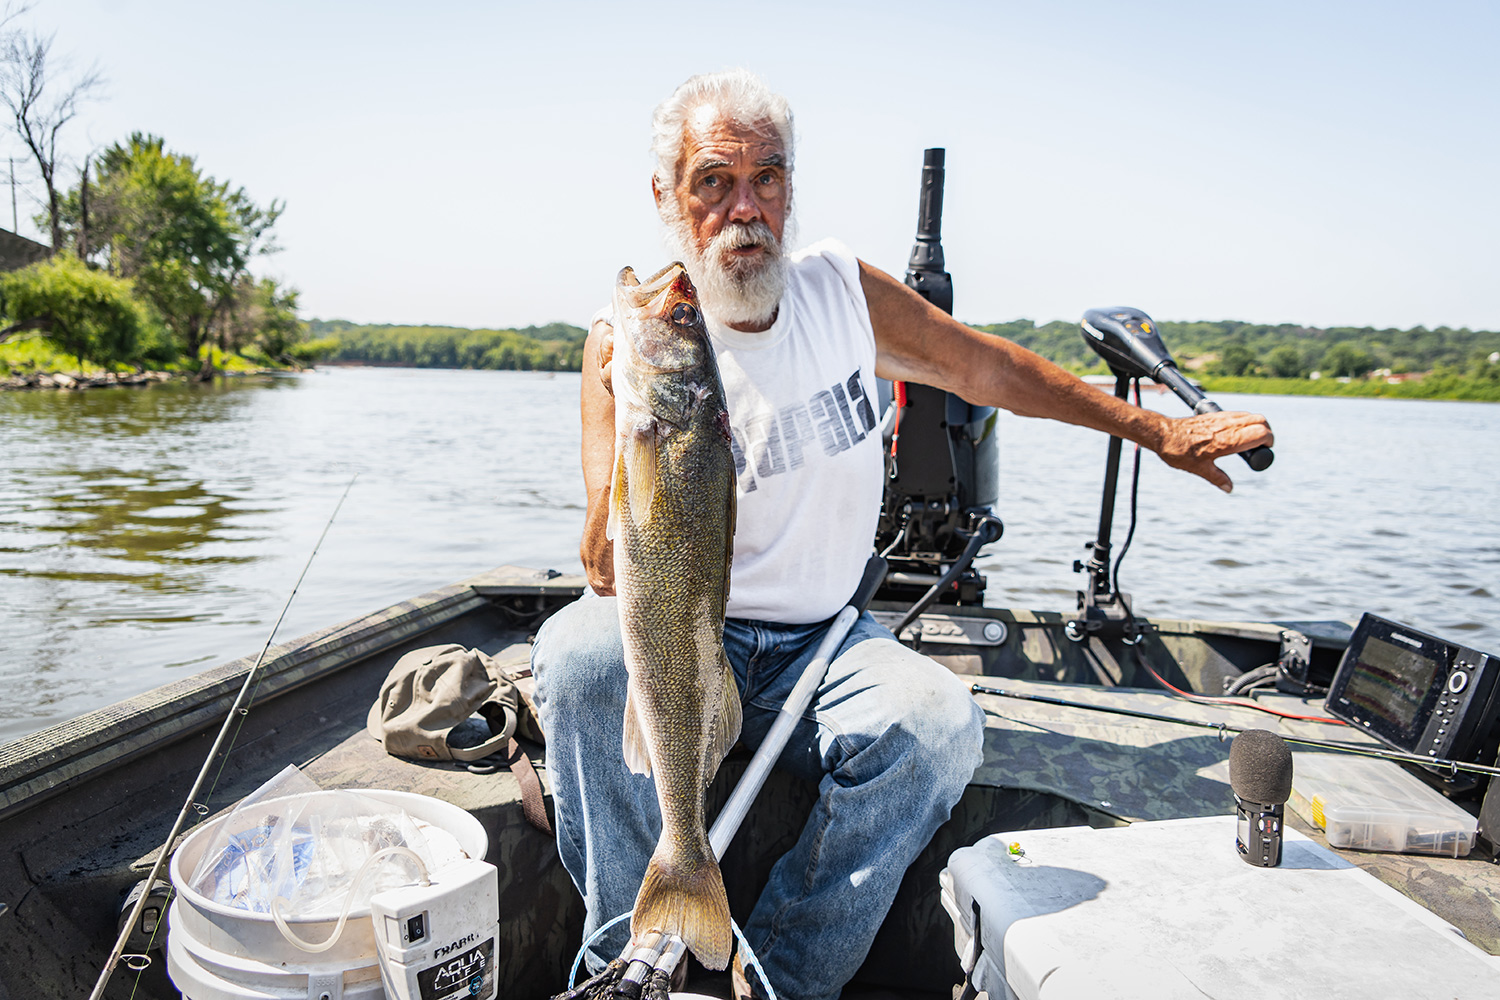 Dick Grzywinski, sitting in boat, holds up a large walleye